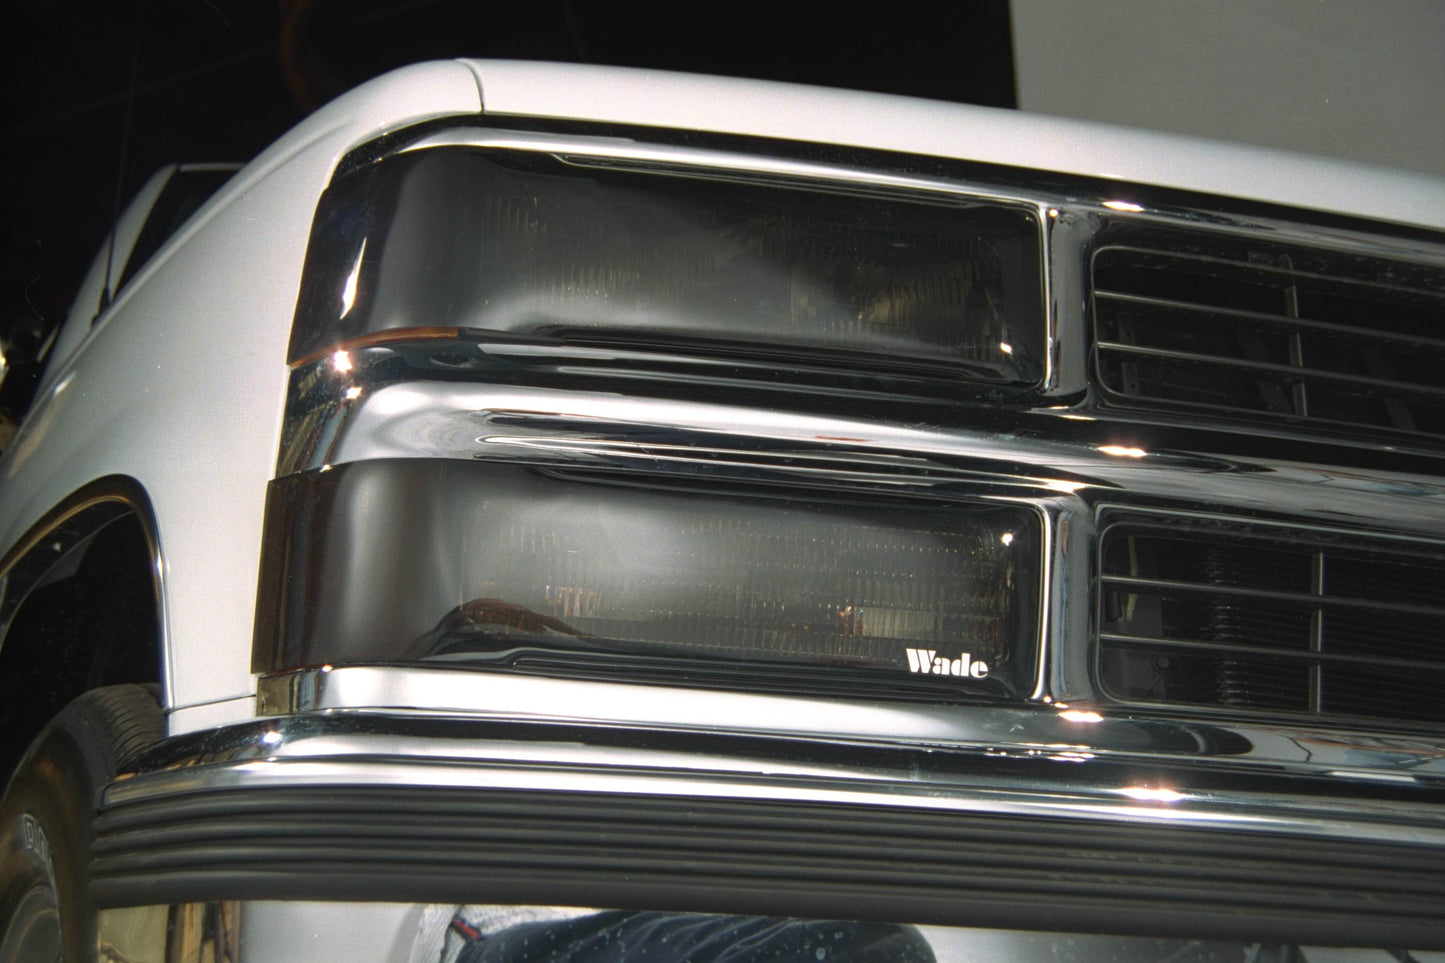 1997 GMC Safari Van Head Light Covers